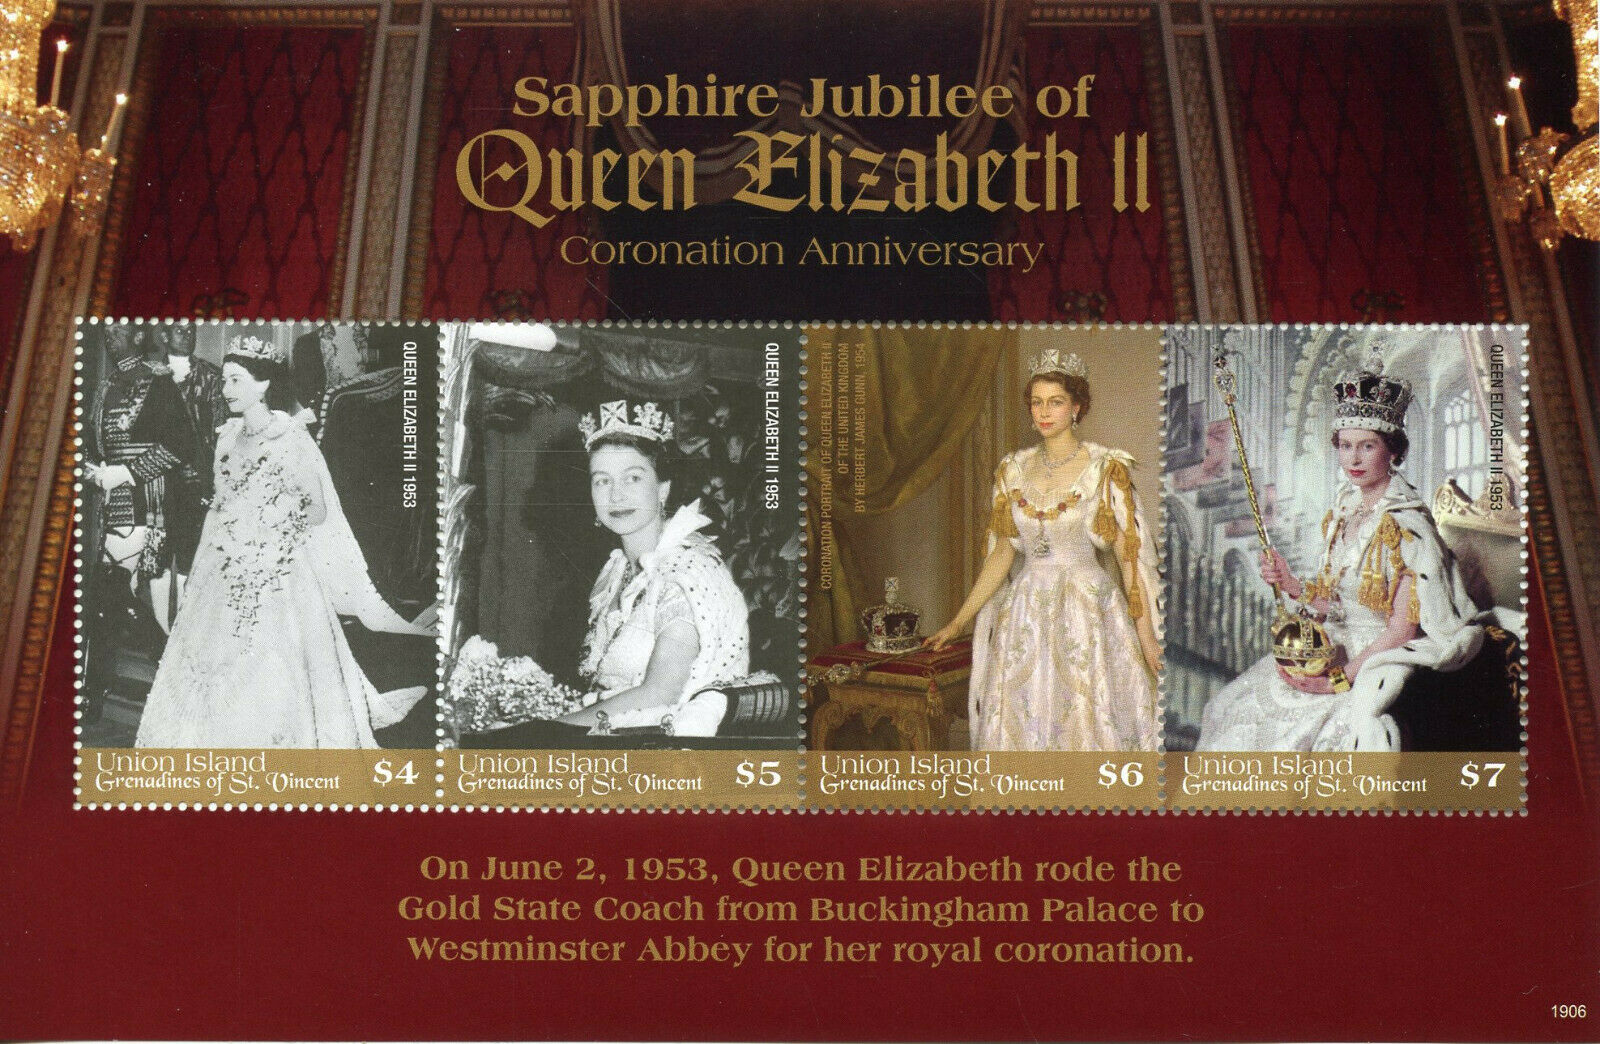 Union Island Gren St Vincent 2019 MNH Royalty Stamps Queen Elizabeth II Coronation 4v MS